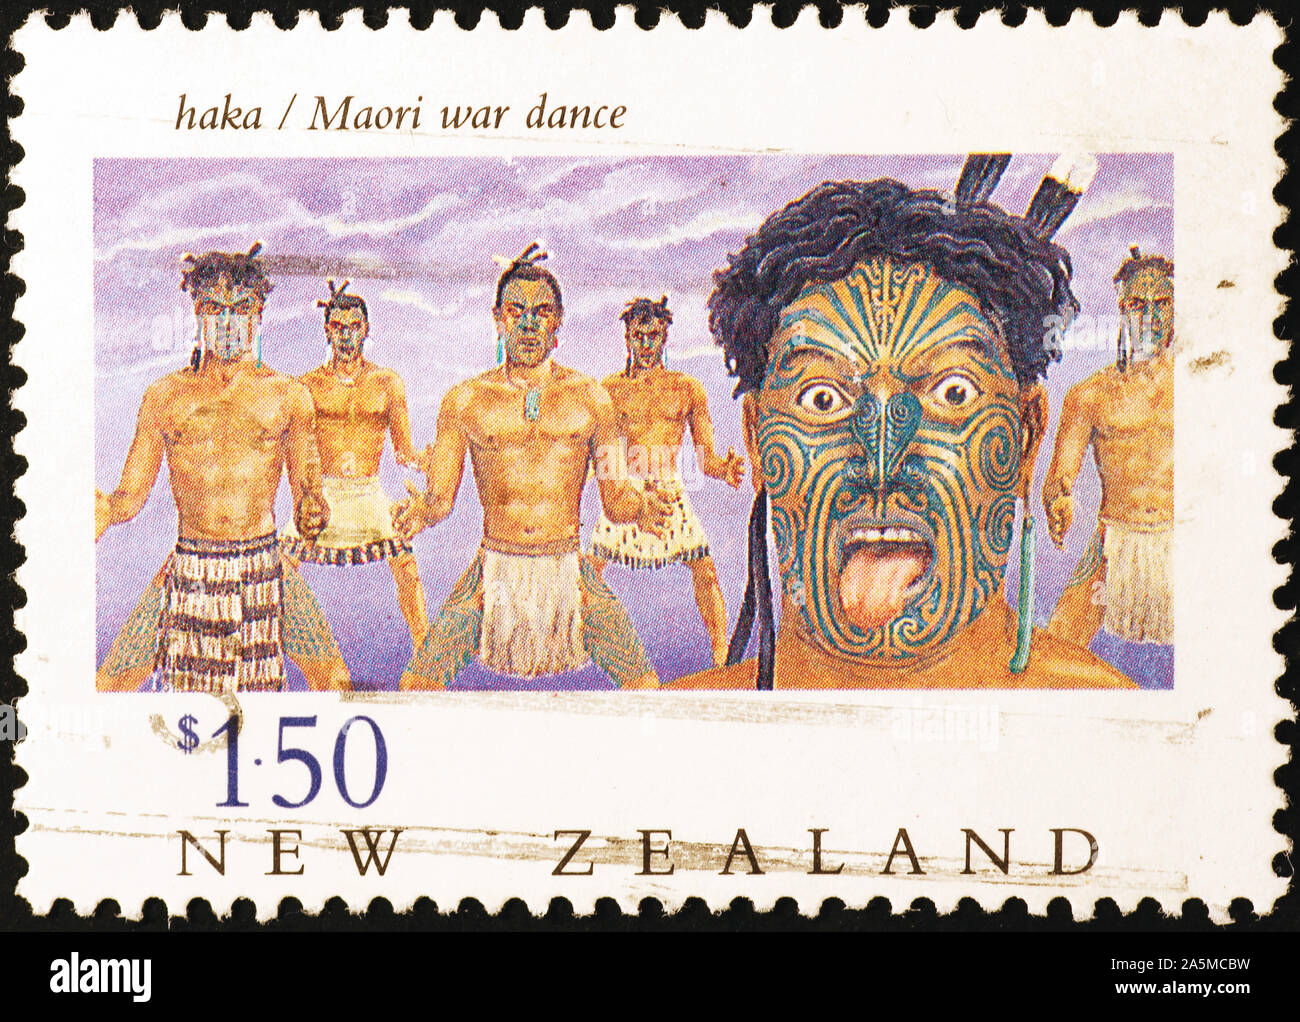 Maori Krieg Tanz auf Neuseeland Briefmarke Stockfoto